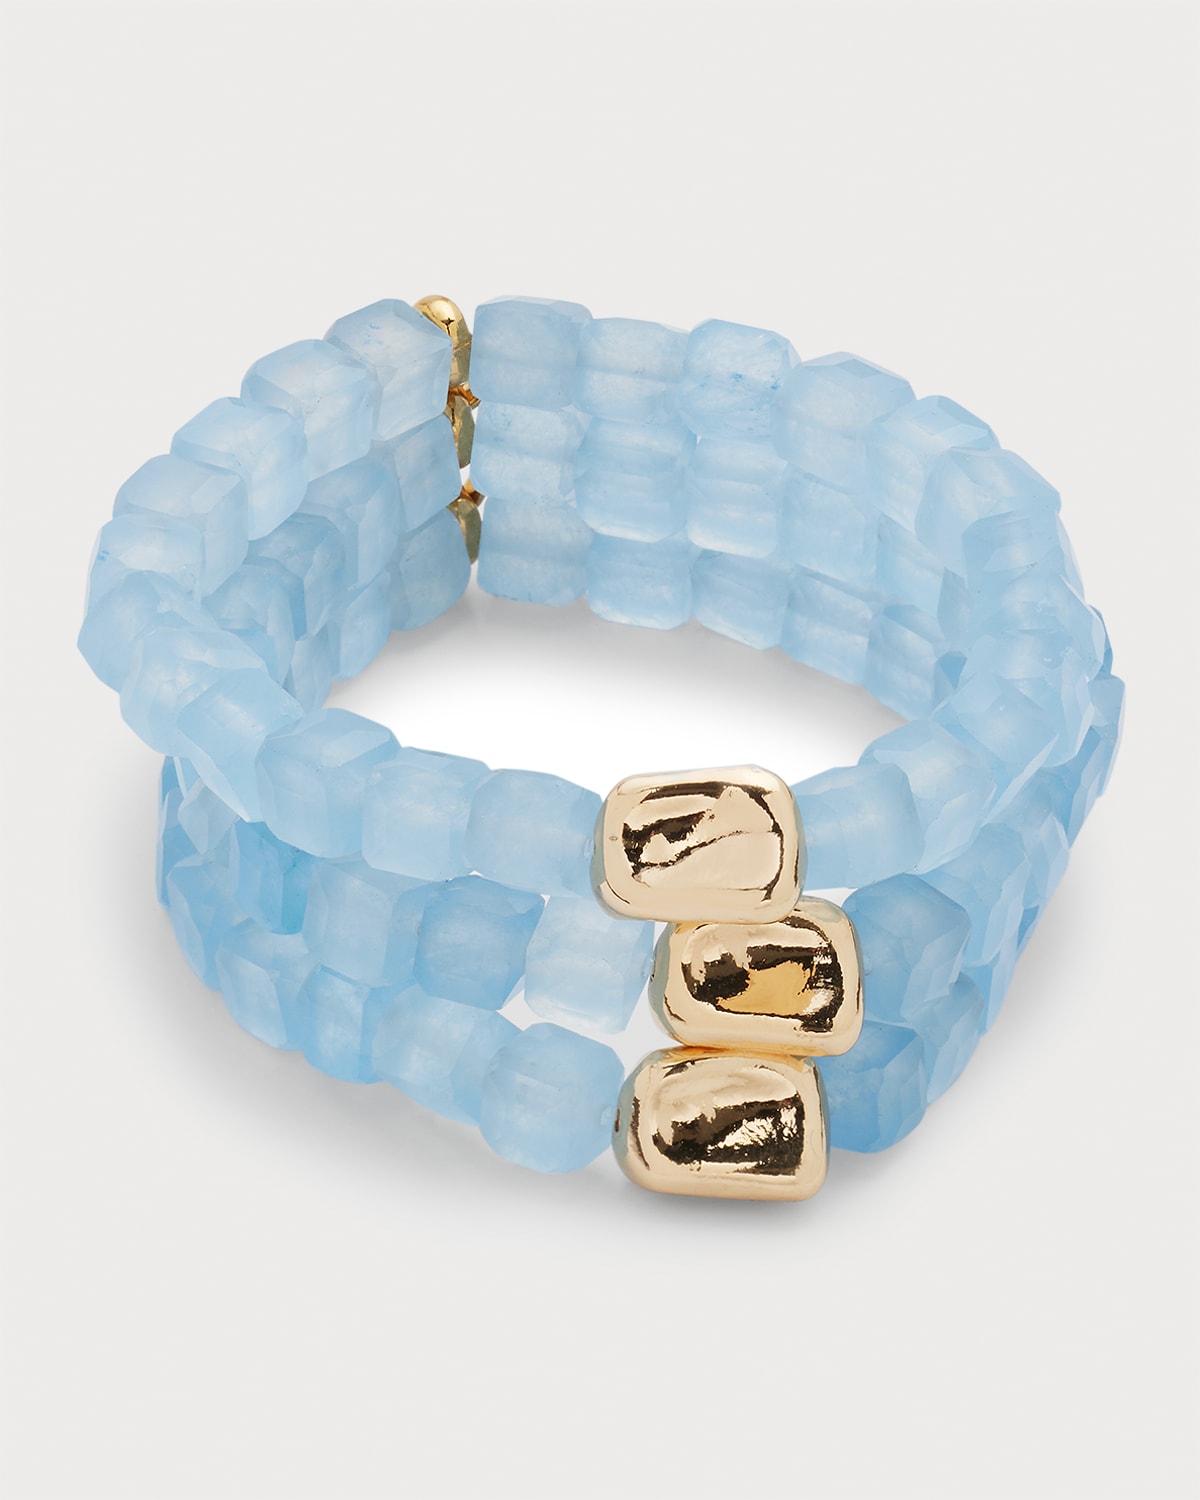 Devon Leigh Aquamarine Gold Accent Stretch Bracelets, Set of 3